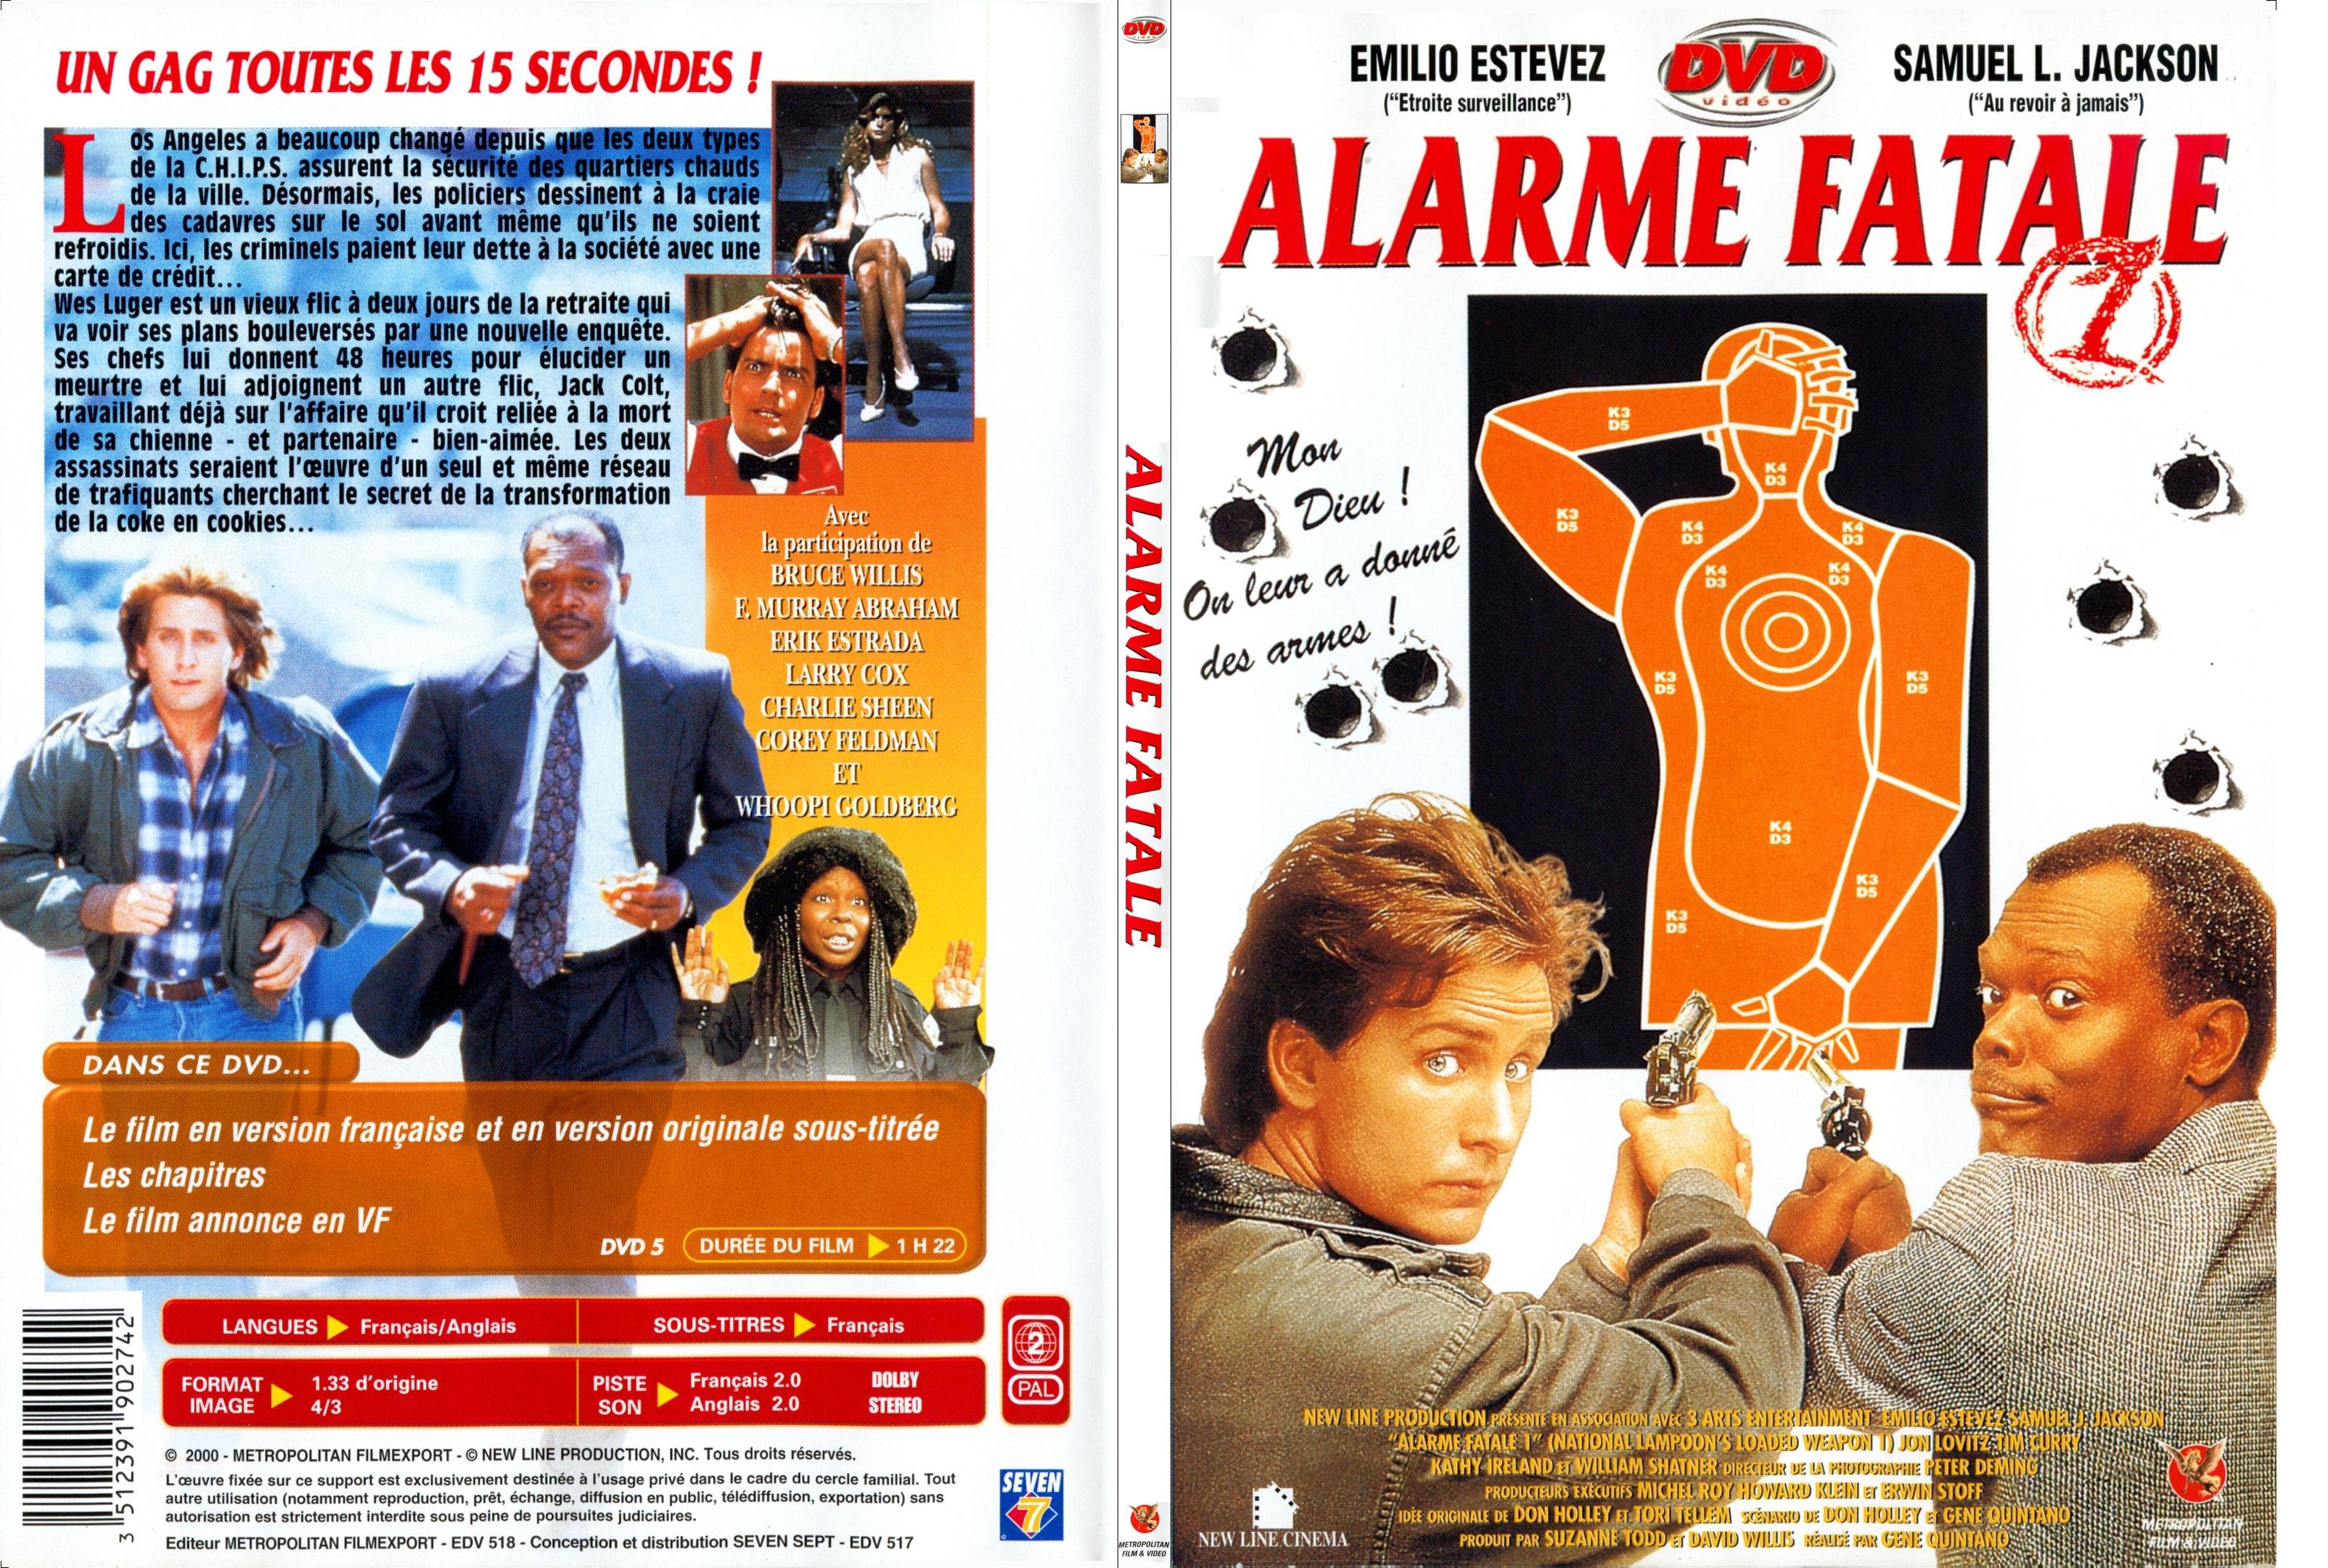 Jaquette DVD Alarme fatale - SLIM